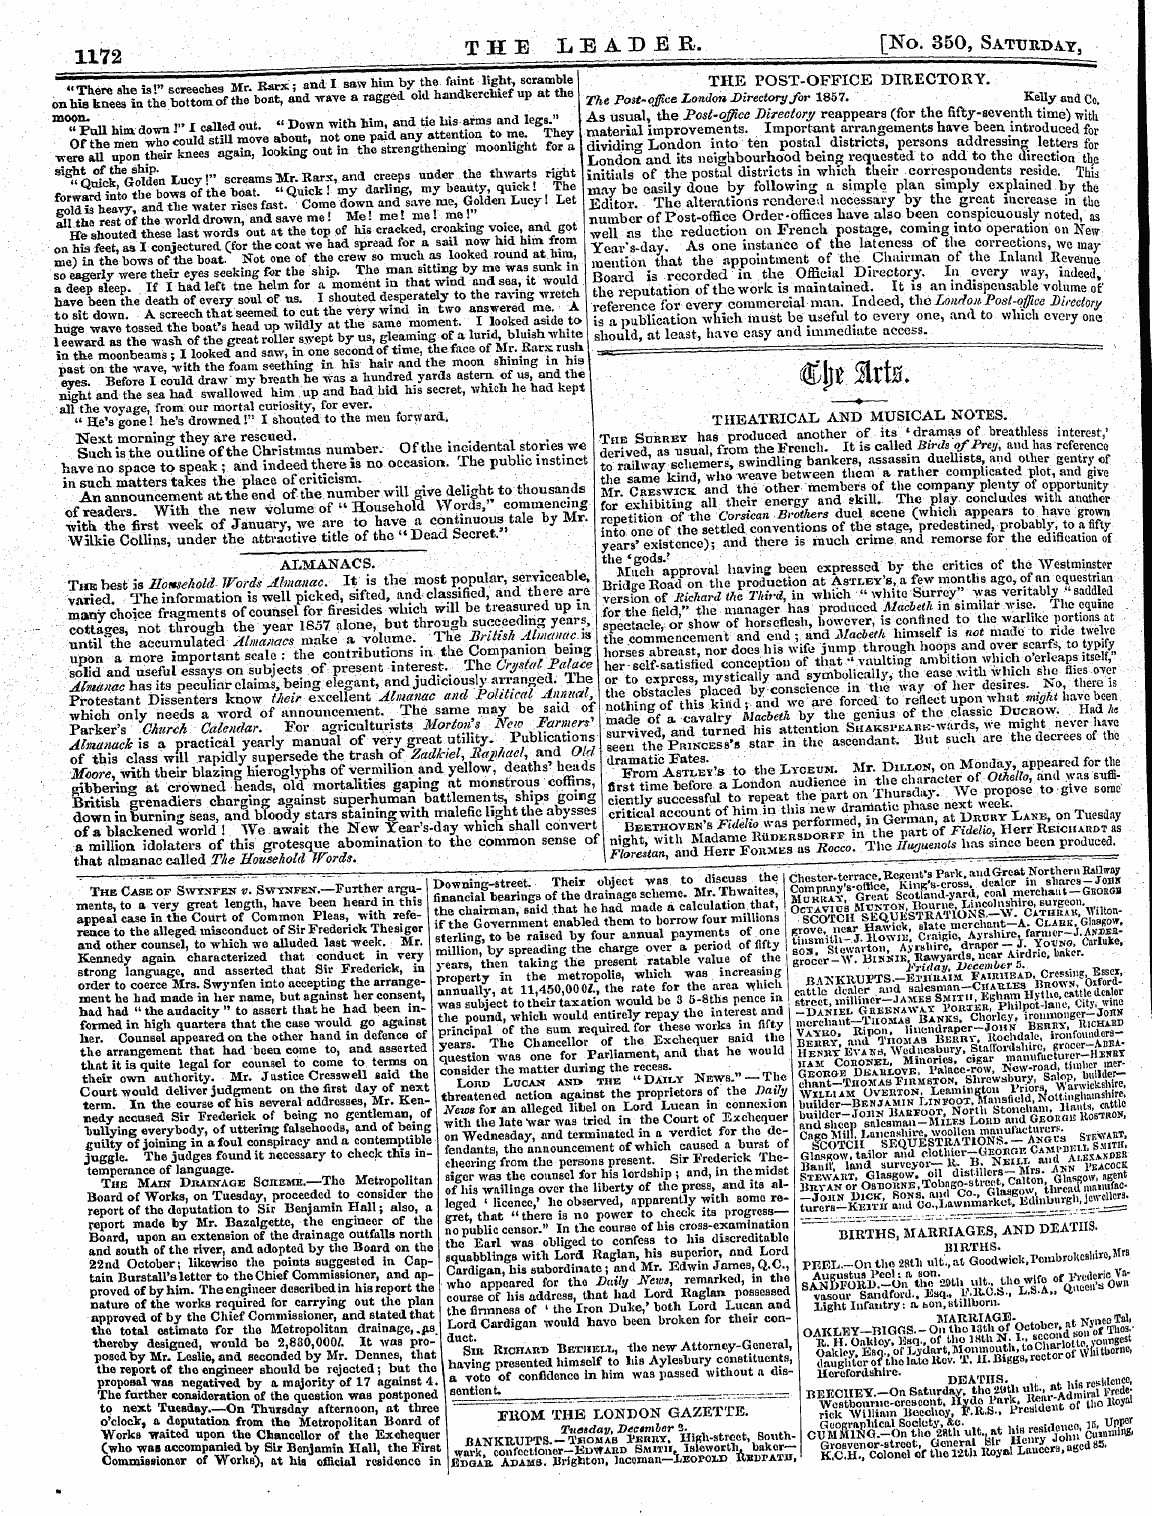 Leader (1850-1860): jS F Y, 2nd edition - Si '''-' ^ ' J